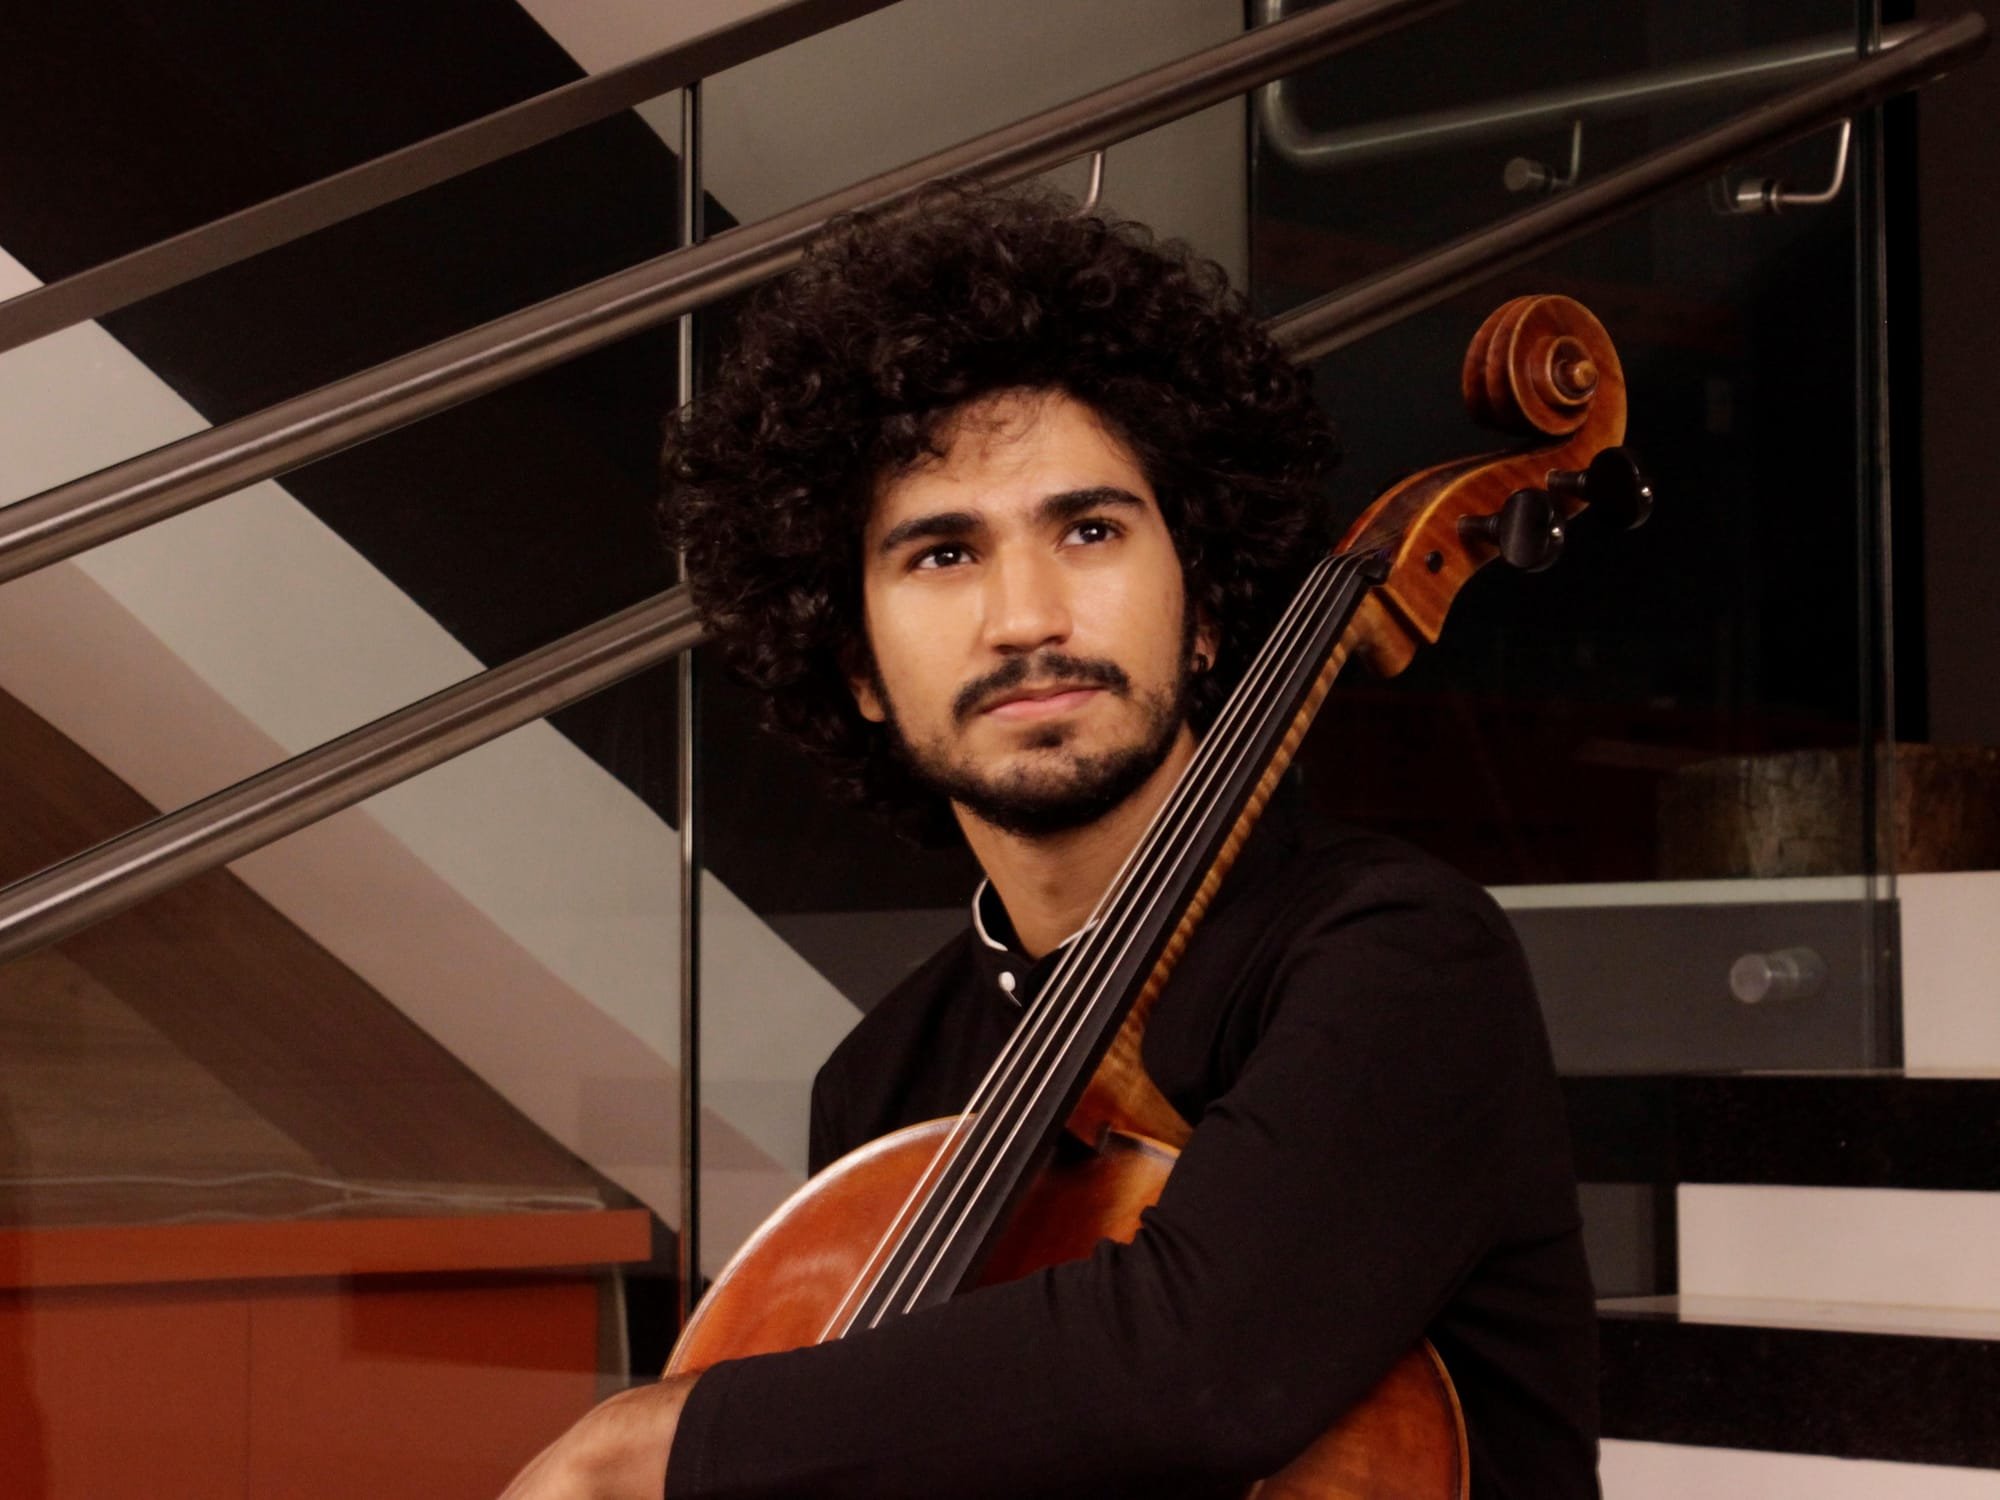 Jovem talento do violoncelo se apresenta nesta sexta (7/5) no CTJ Hall